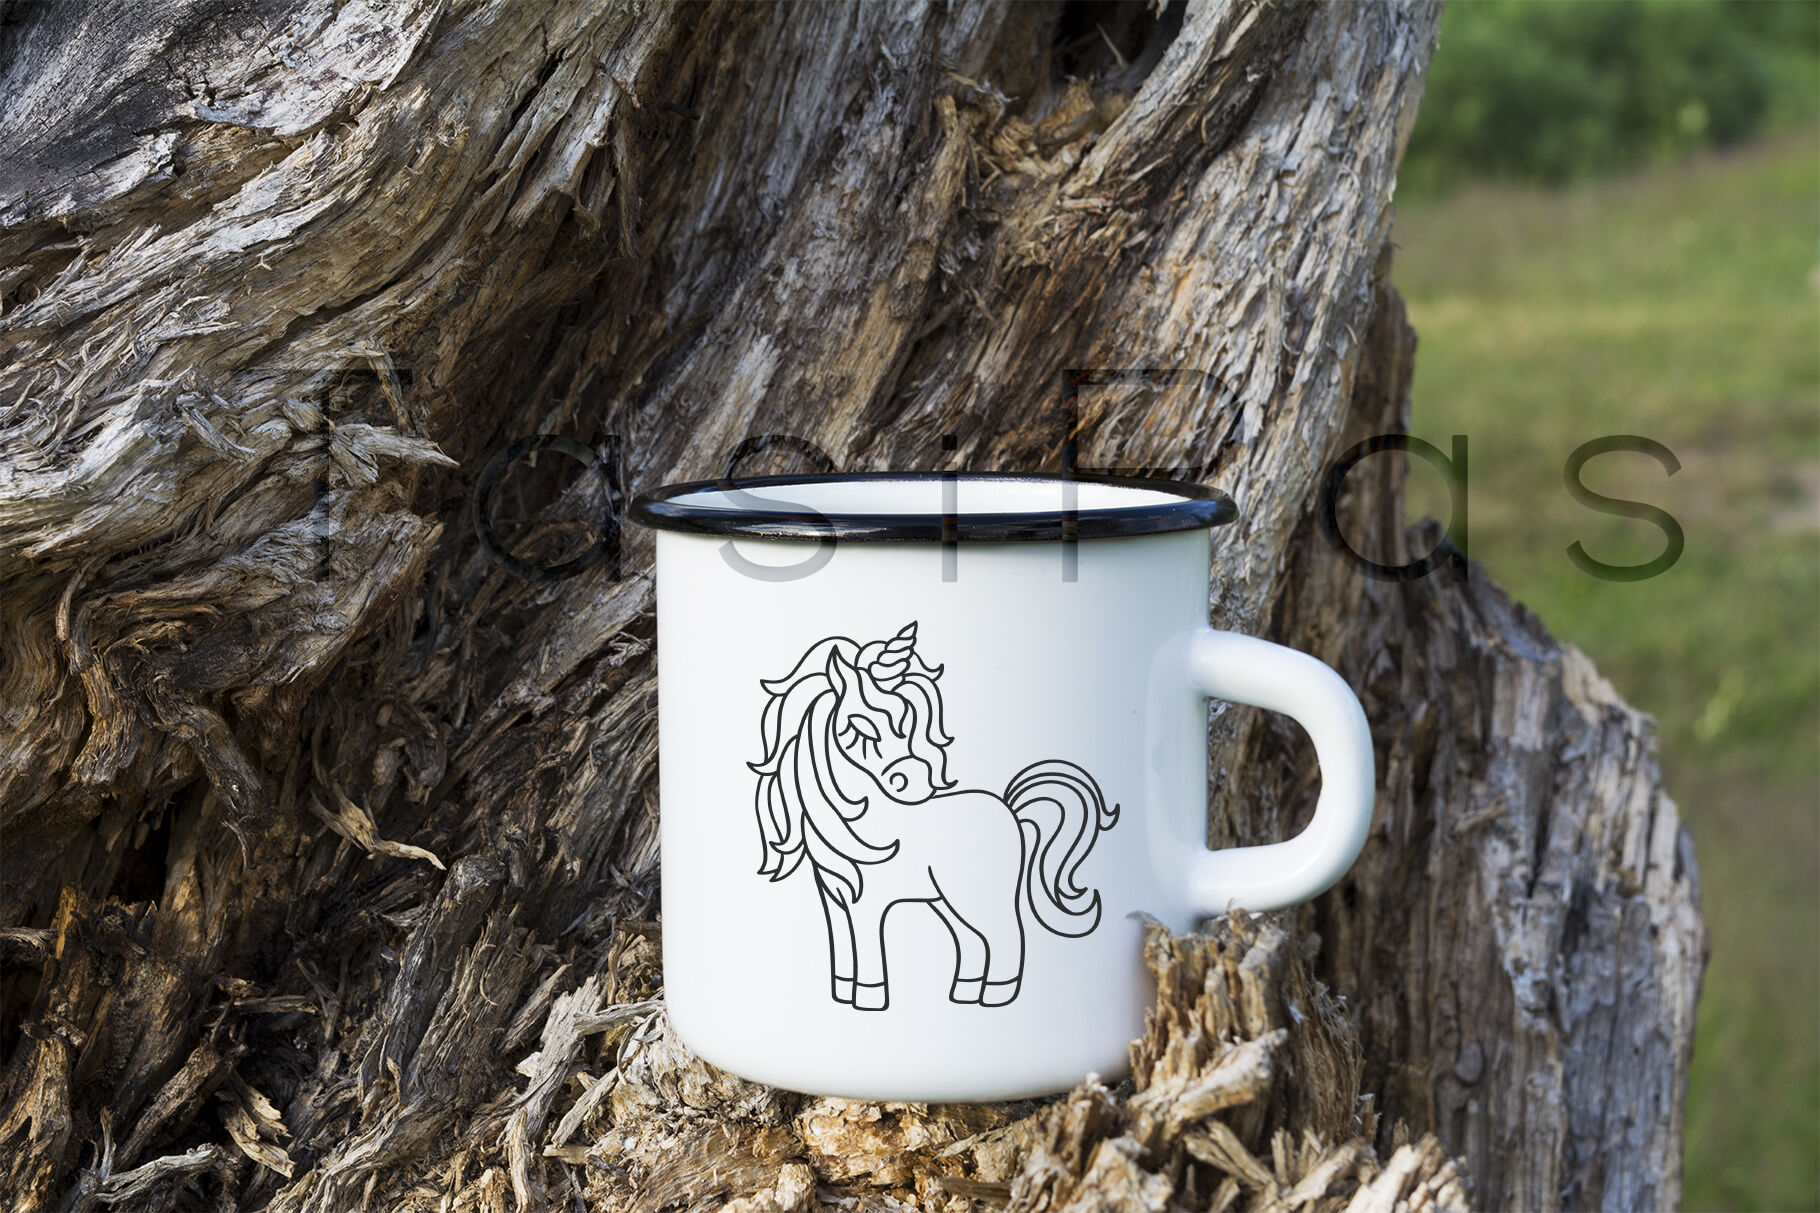 Download Campfire enamel mug mockup with stump. By TasiPas ...